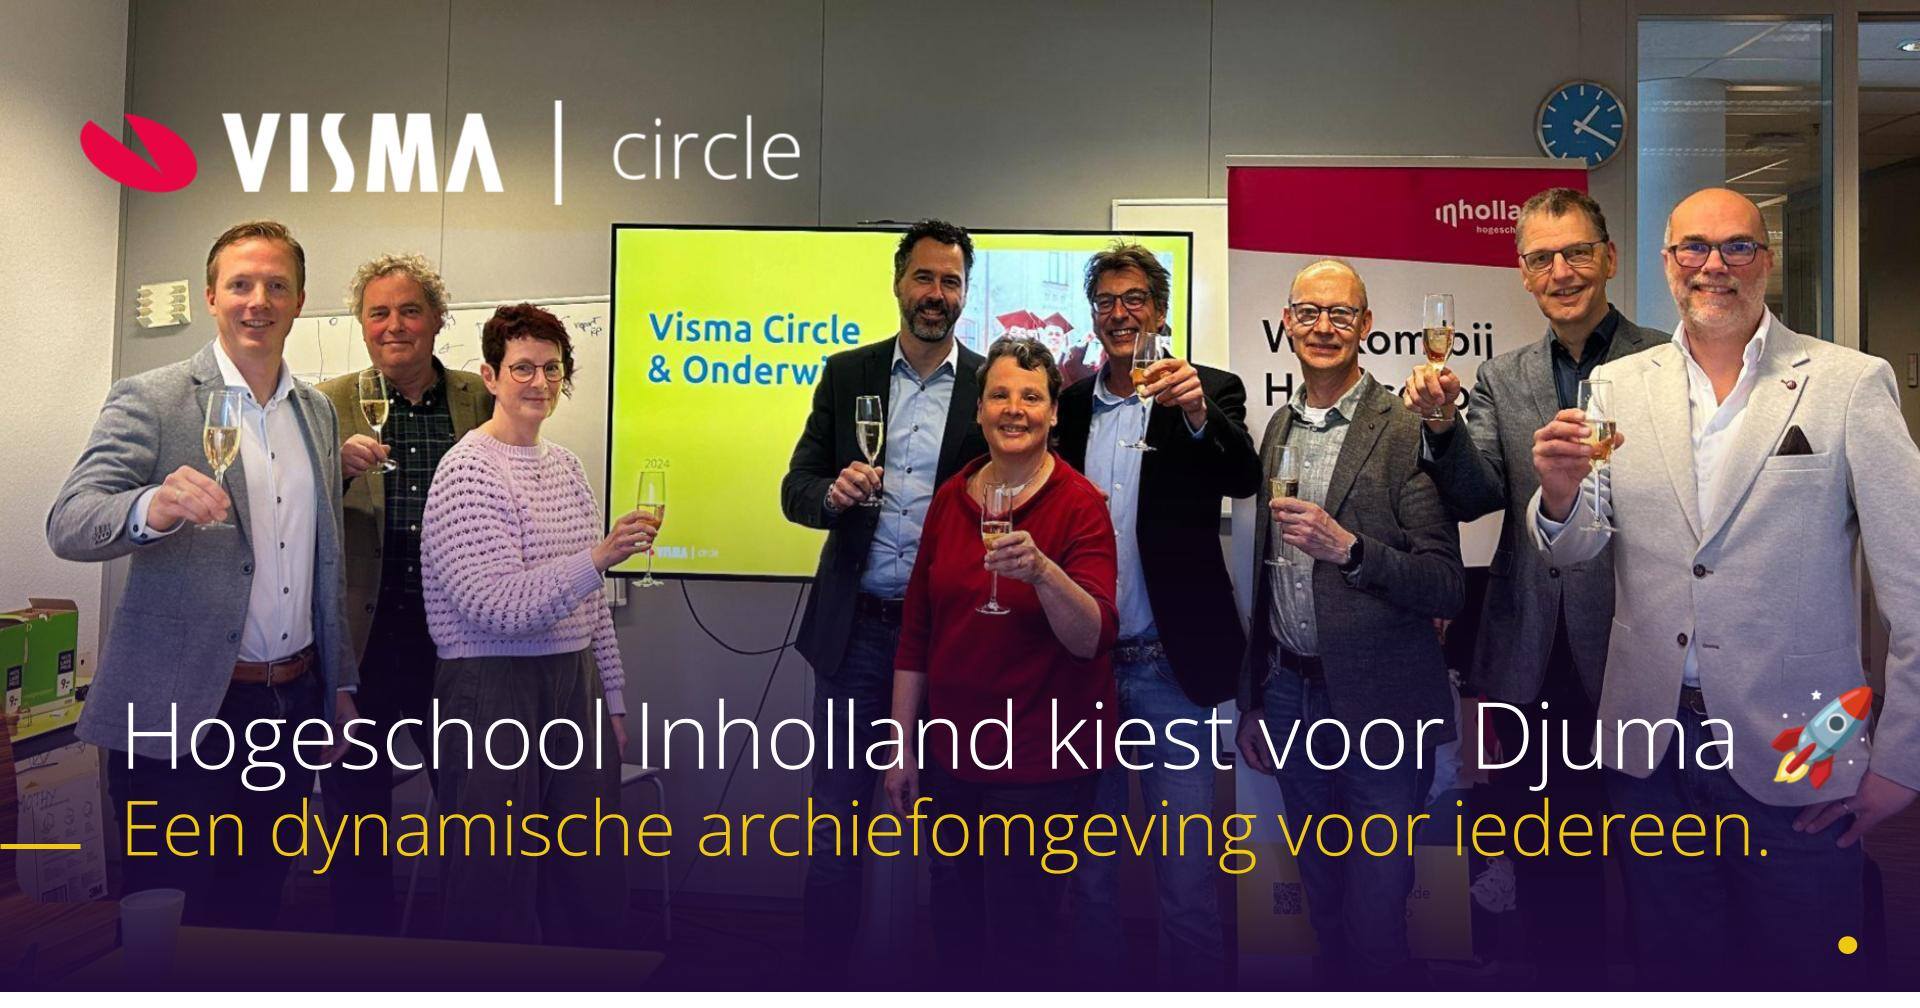 Hogeschool Inholland kiest voor Djuma van Visma Circle